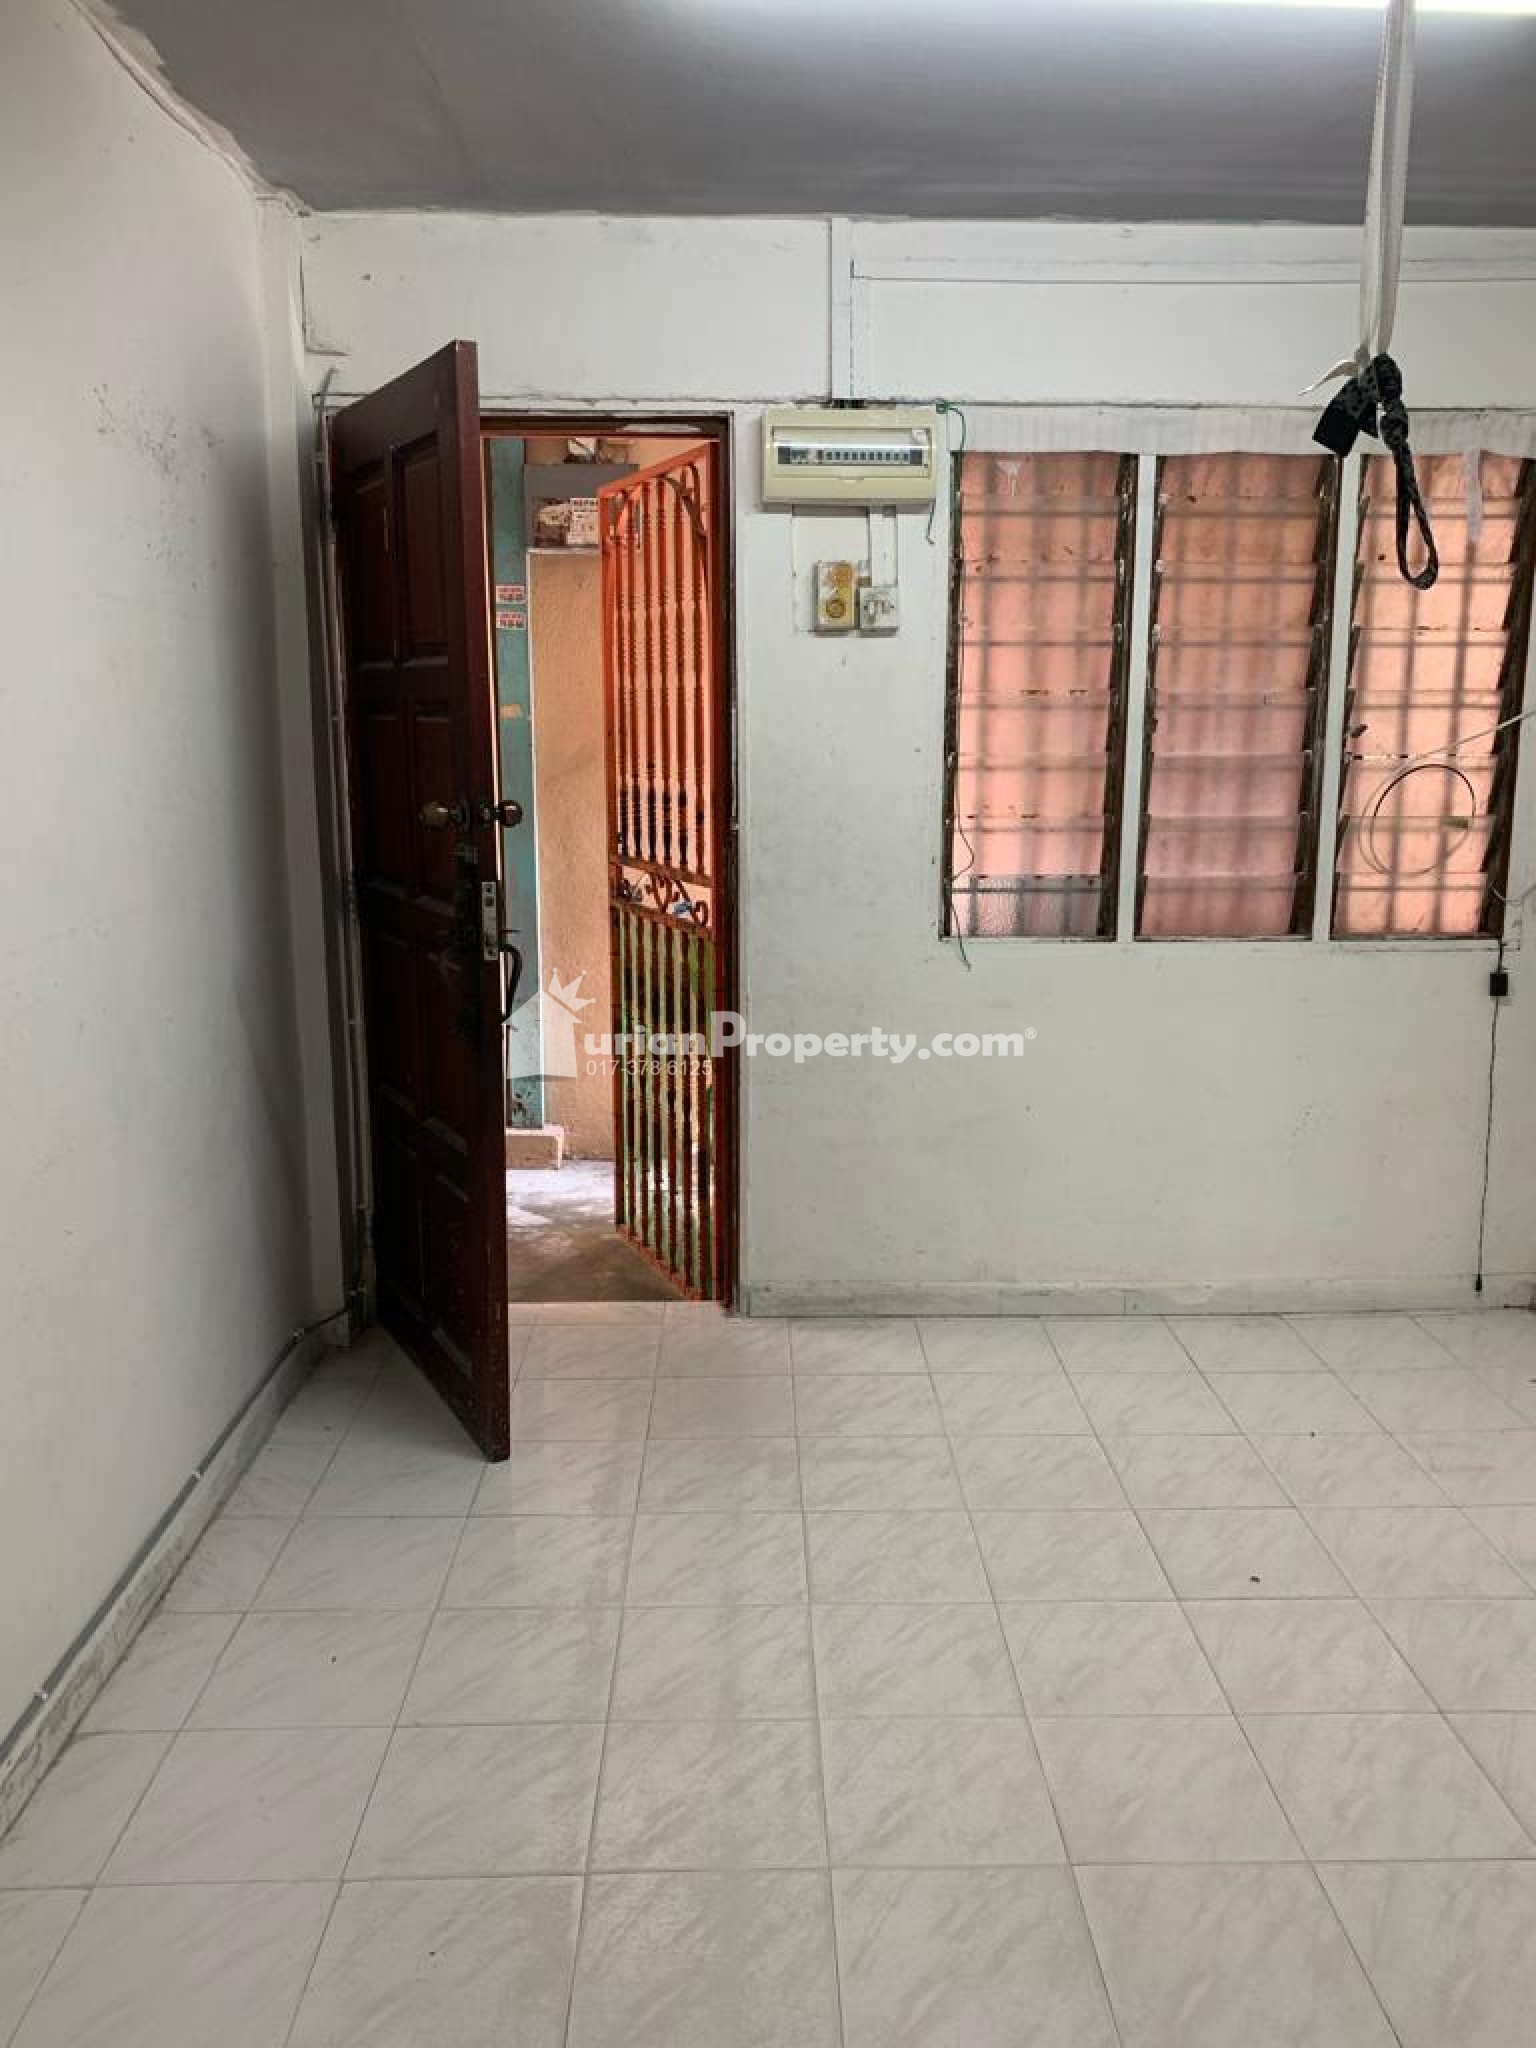 Apartment For Sale at Pandan Jaya